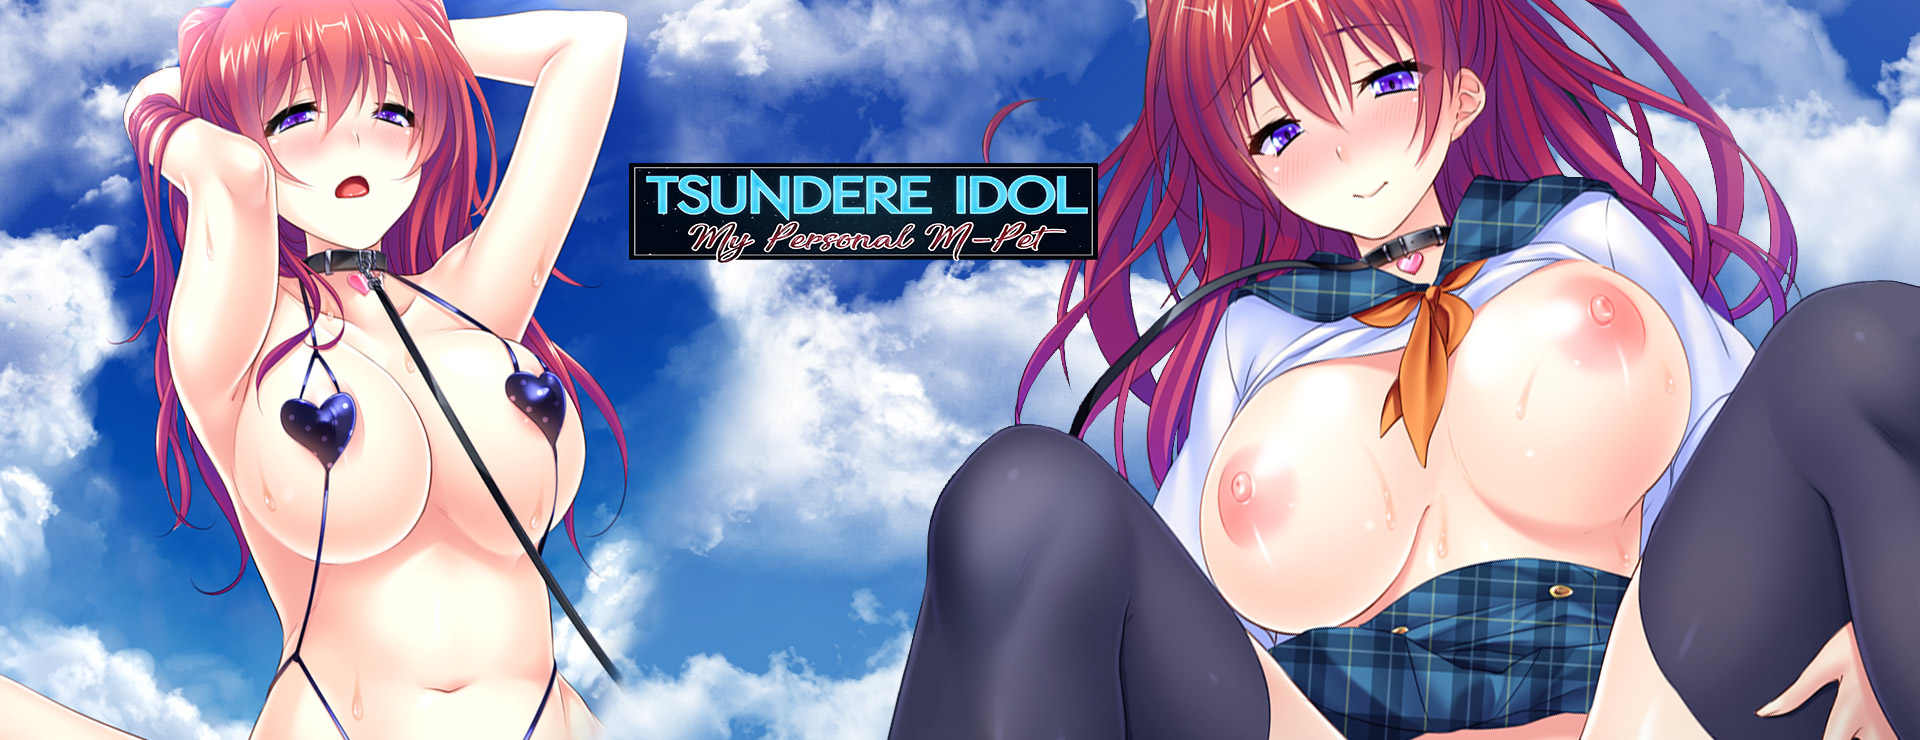 Tsundere Idol: My Personal M-Pet - ビジュアルノベル ゲーム